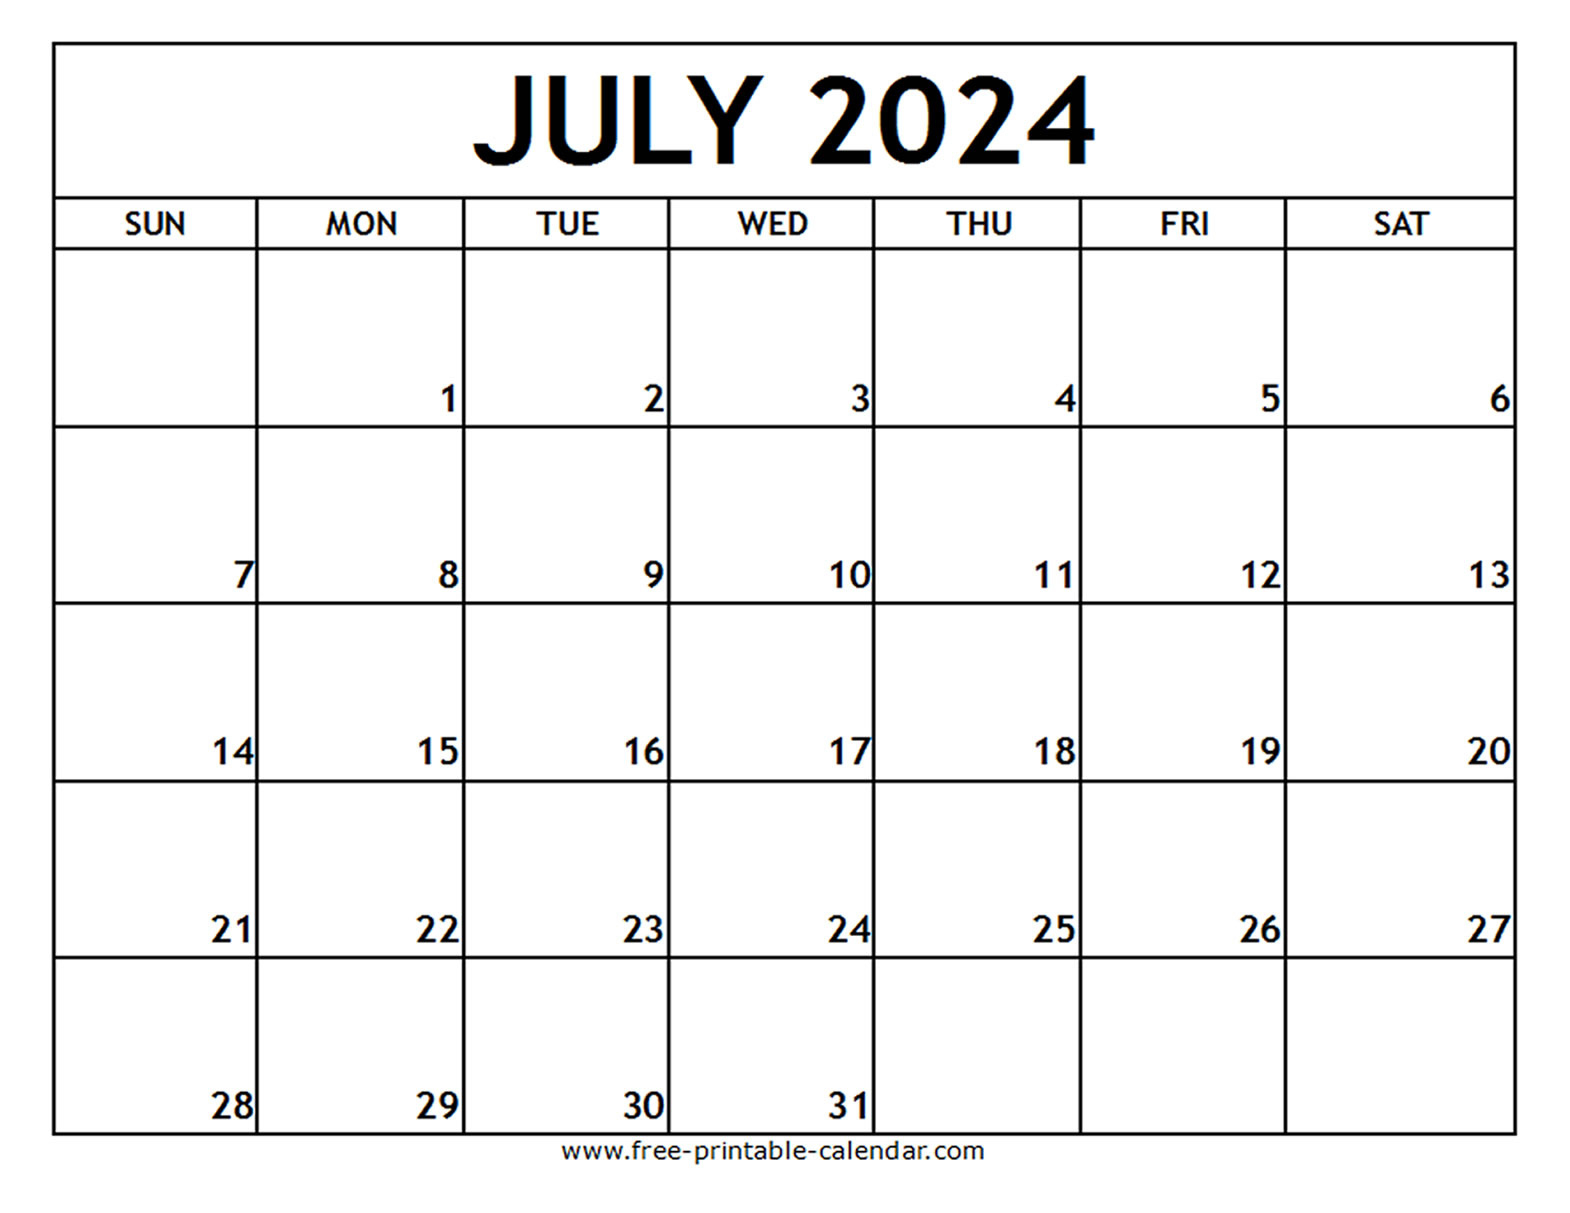 July 2024 Printable Calendar - Free-Printable-Calendar inside July 2024 Calendar Copy and Paste